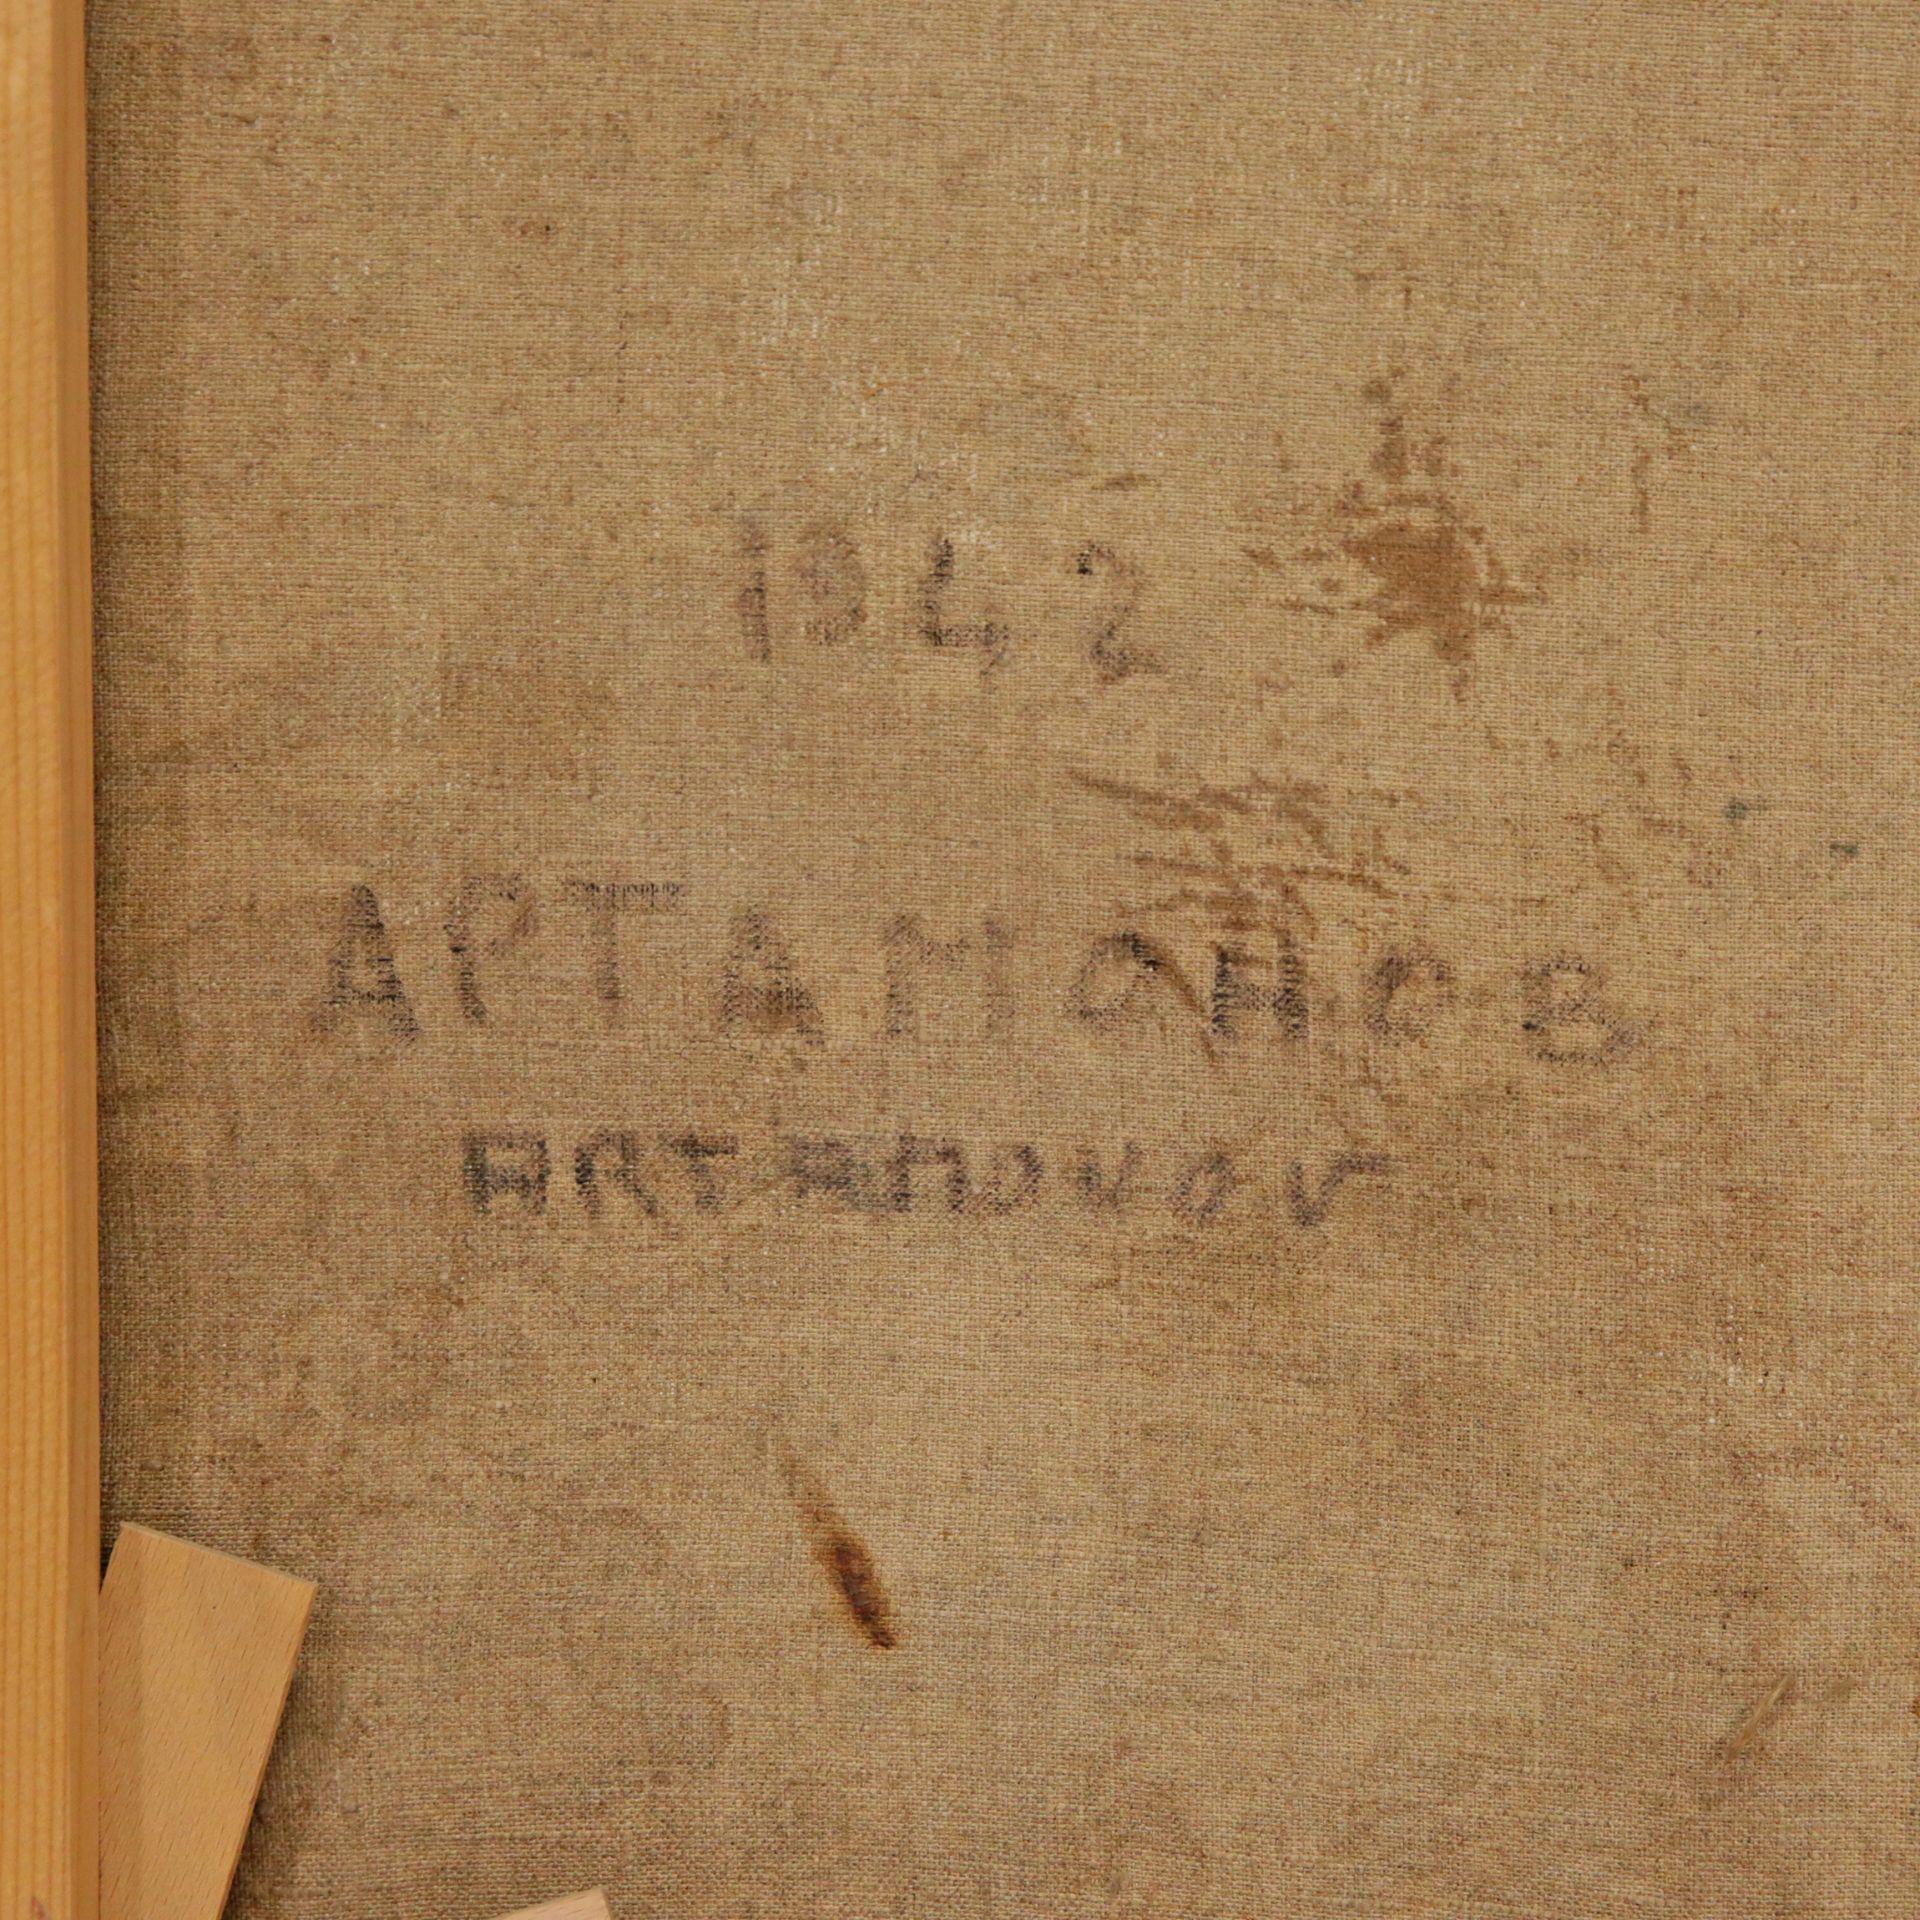 ARTAMONOV "Seated Nude", 1942, oil on canvas, signed on the back in Russian - ARTAMONOV 1942. - Image 4 of 6